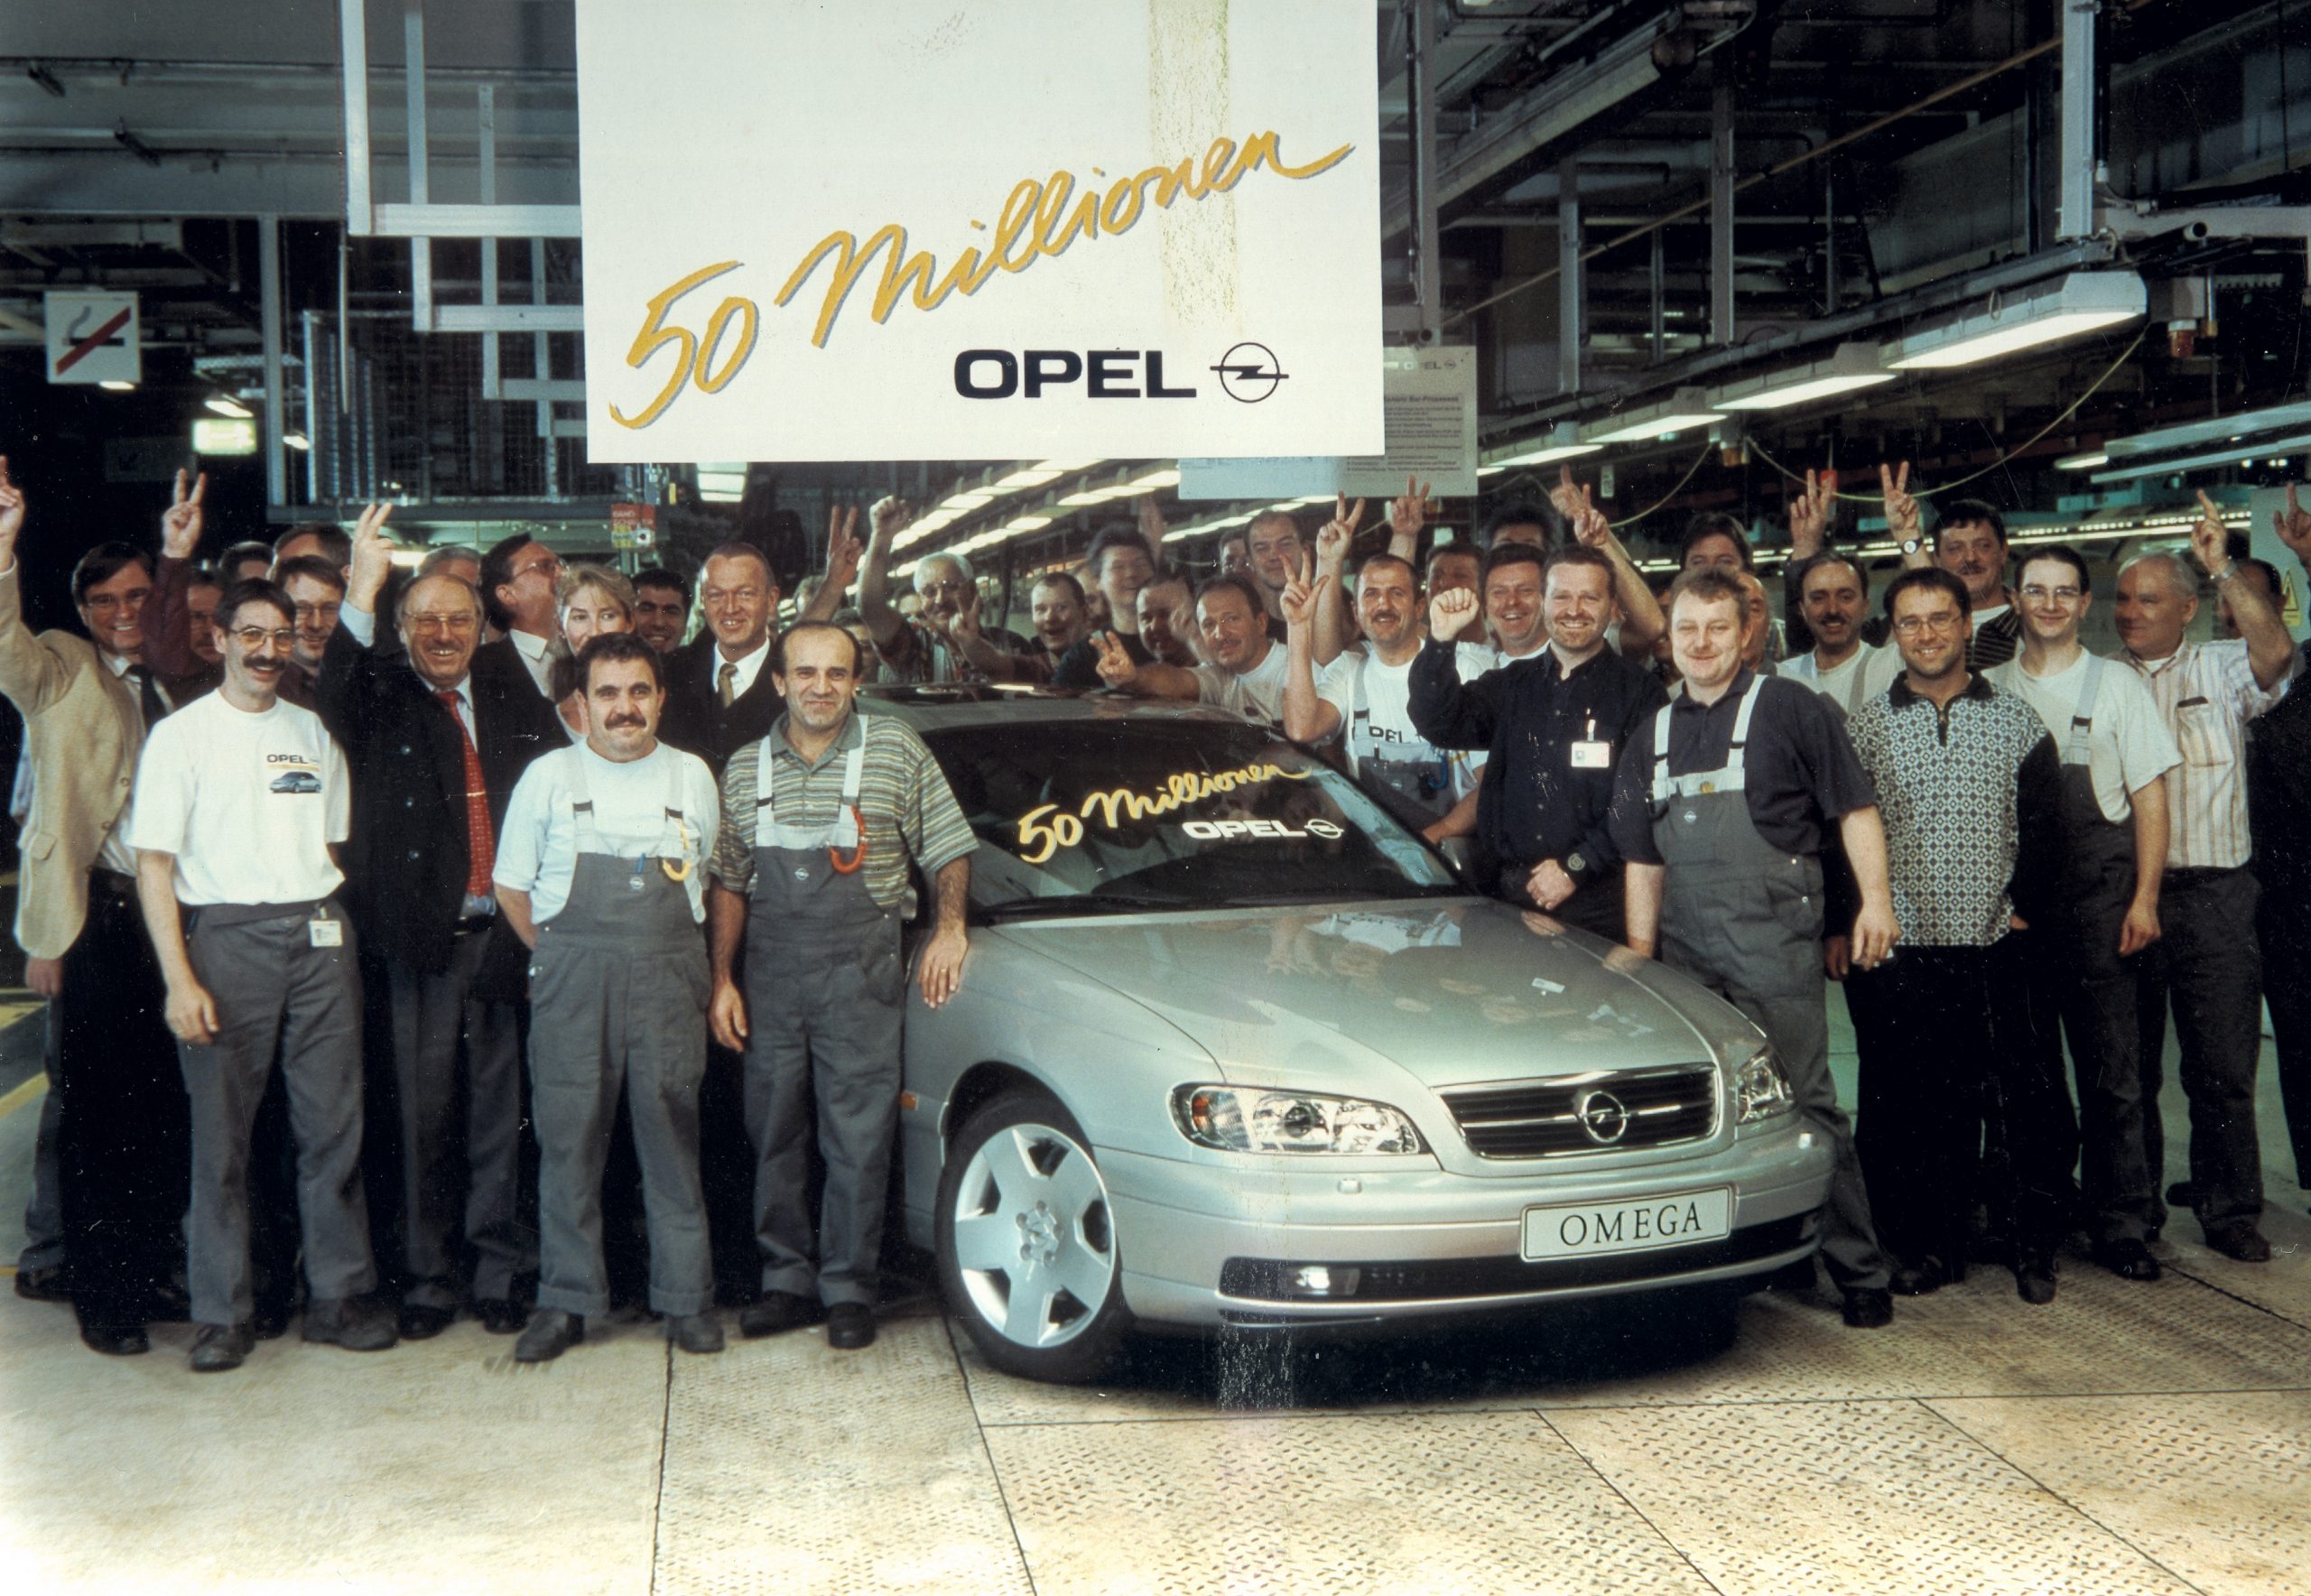 Si allarga gamma degli ibridi Renault E-Tech - image 1999-50-milioni-Opel-scaled on https://motori.net